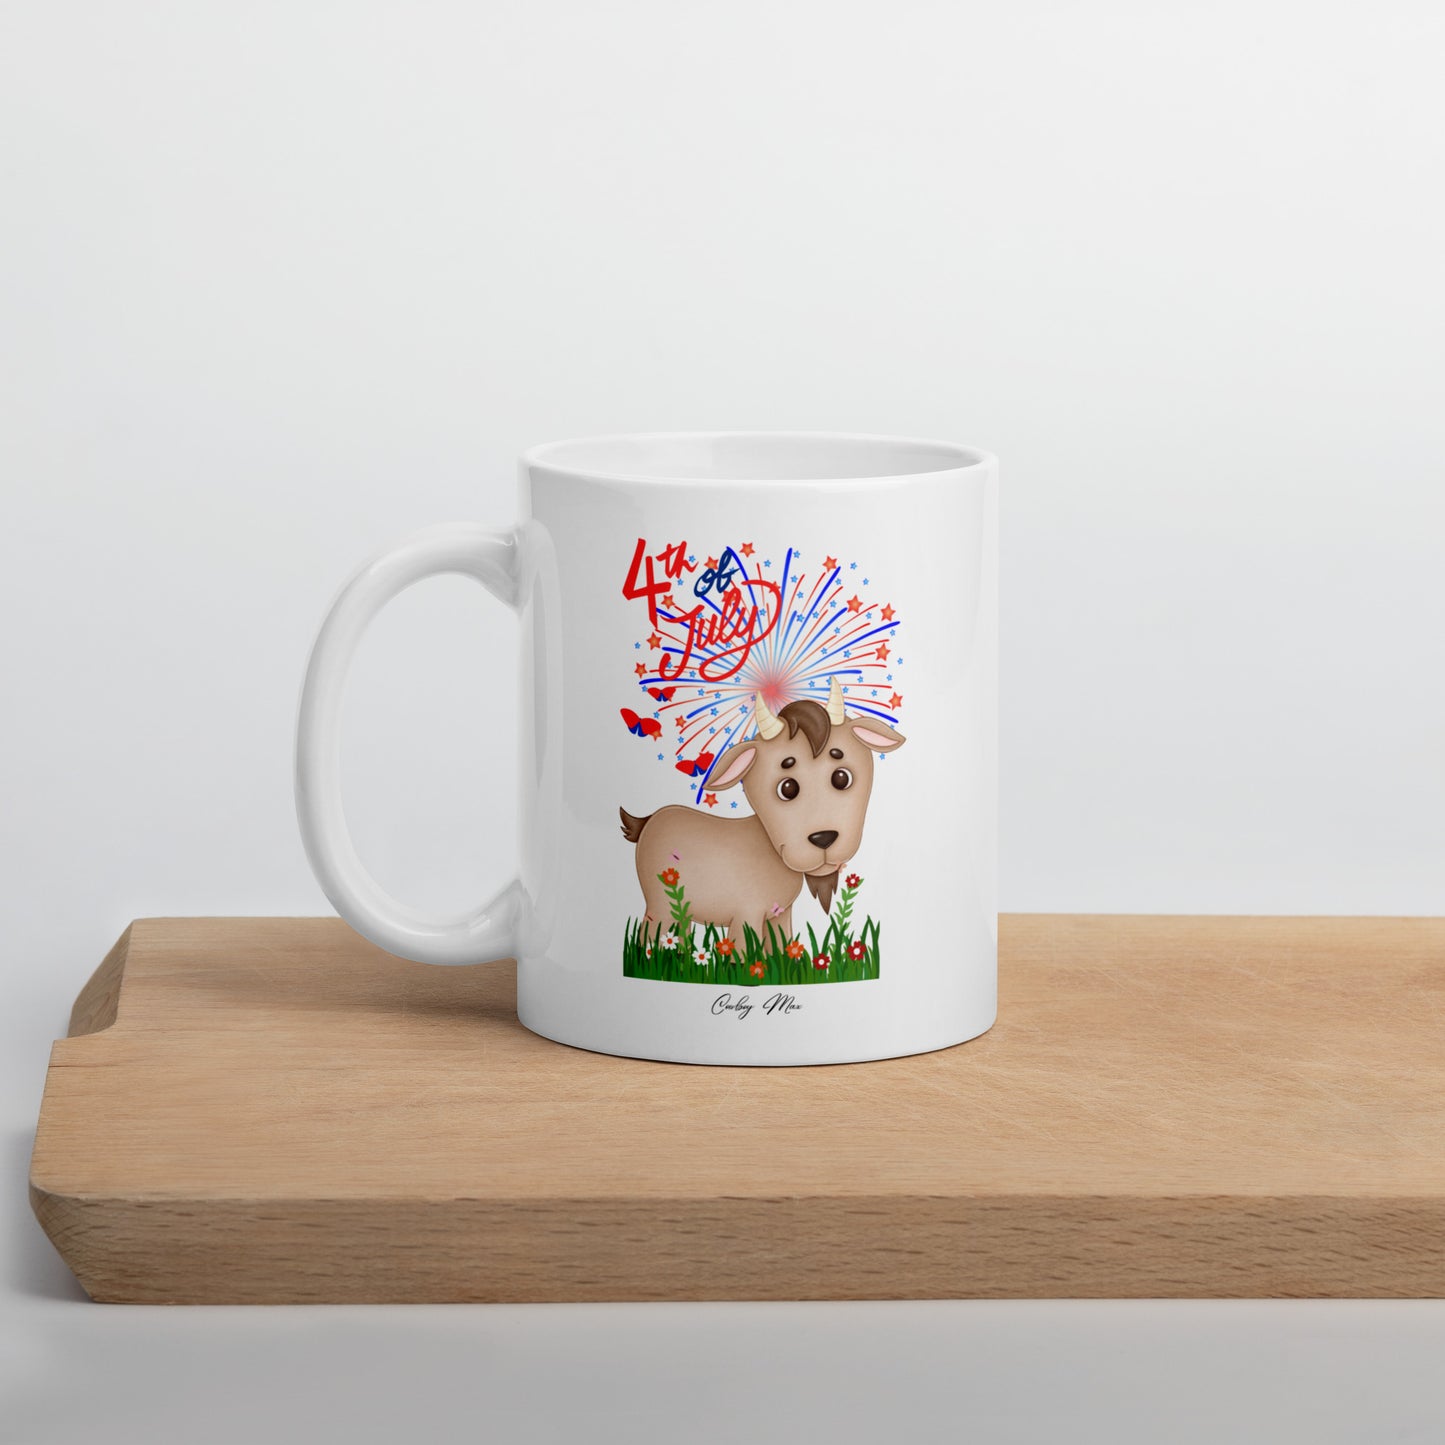 4th Of July Goat: White glossy mug